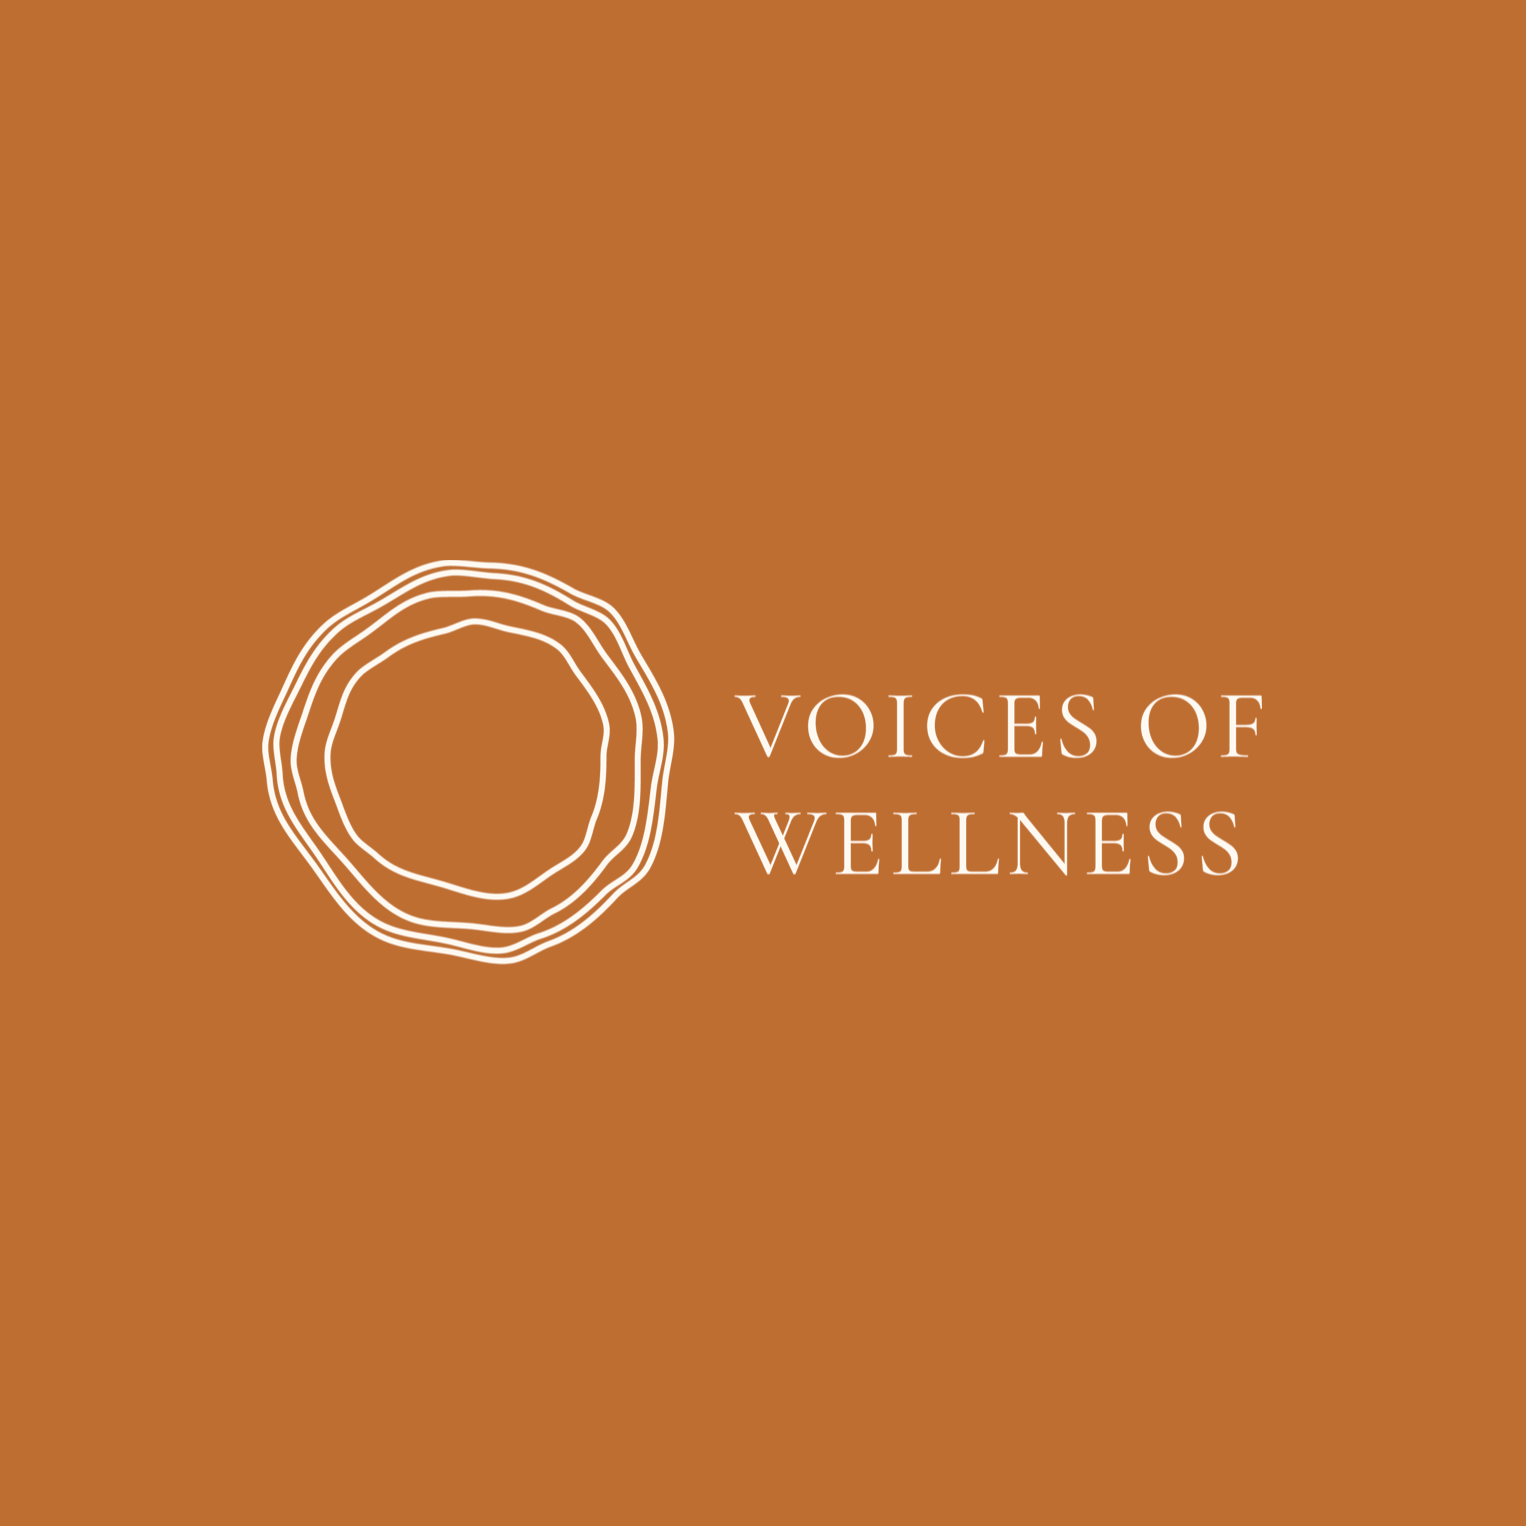 voicesofwellness-logo-orange.png